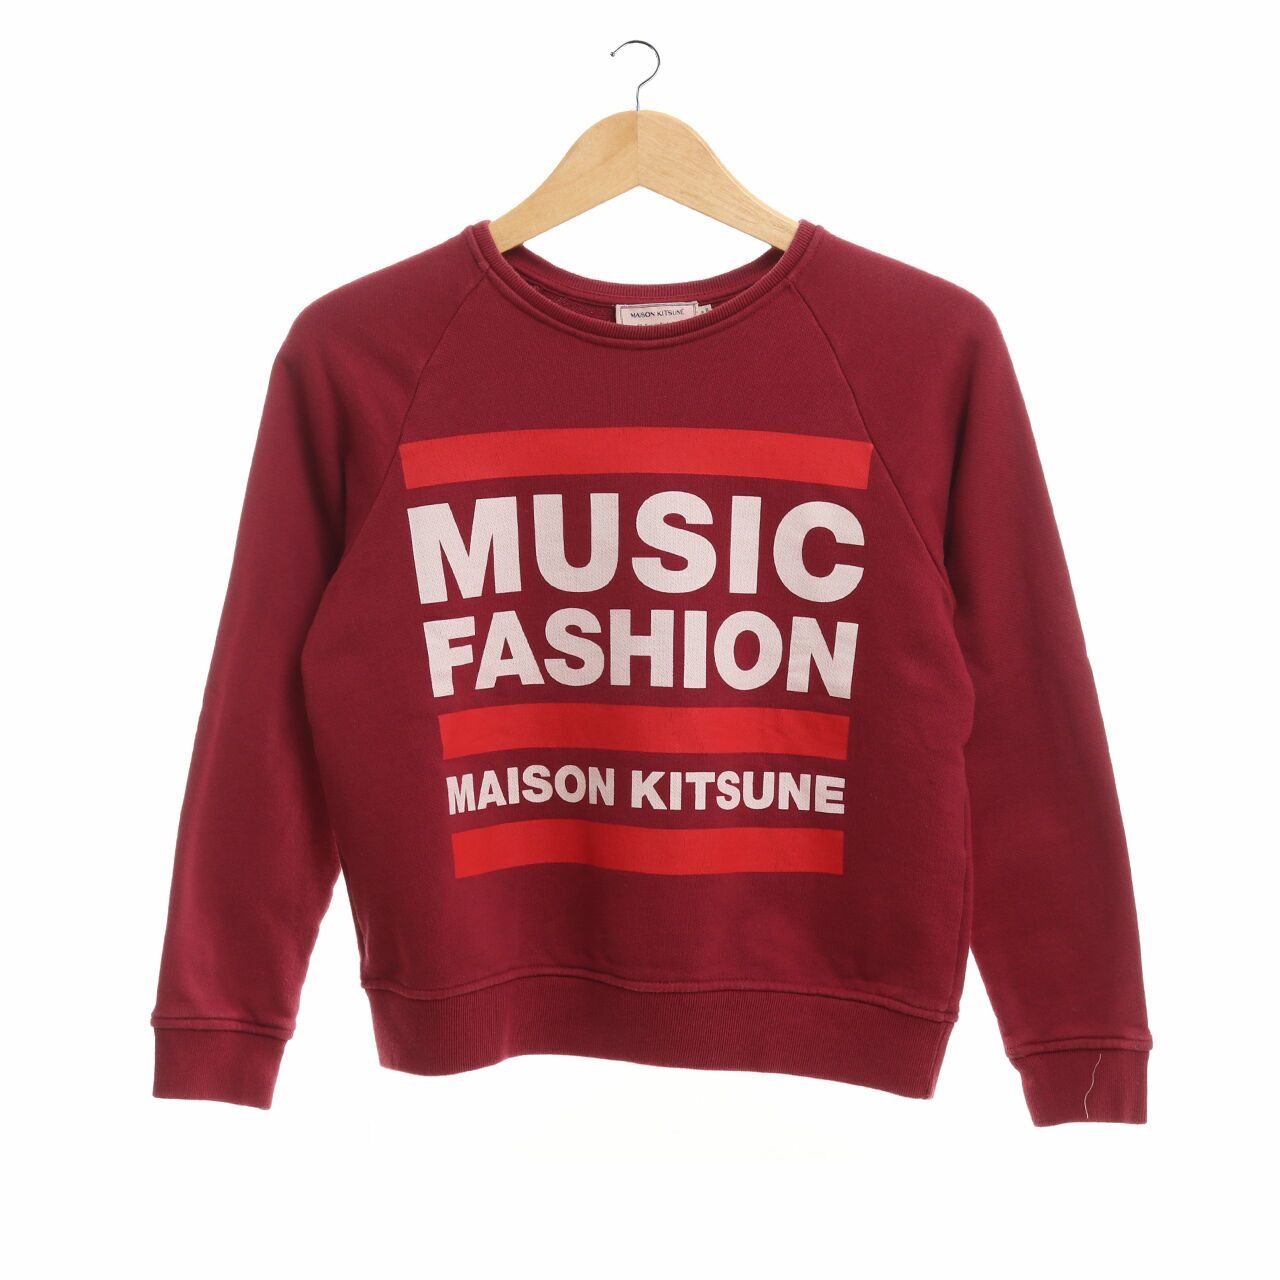 Maison Kitsune Red Sweater